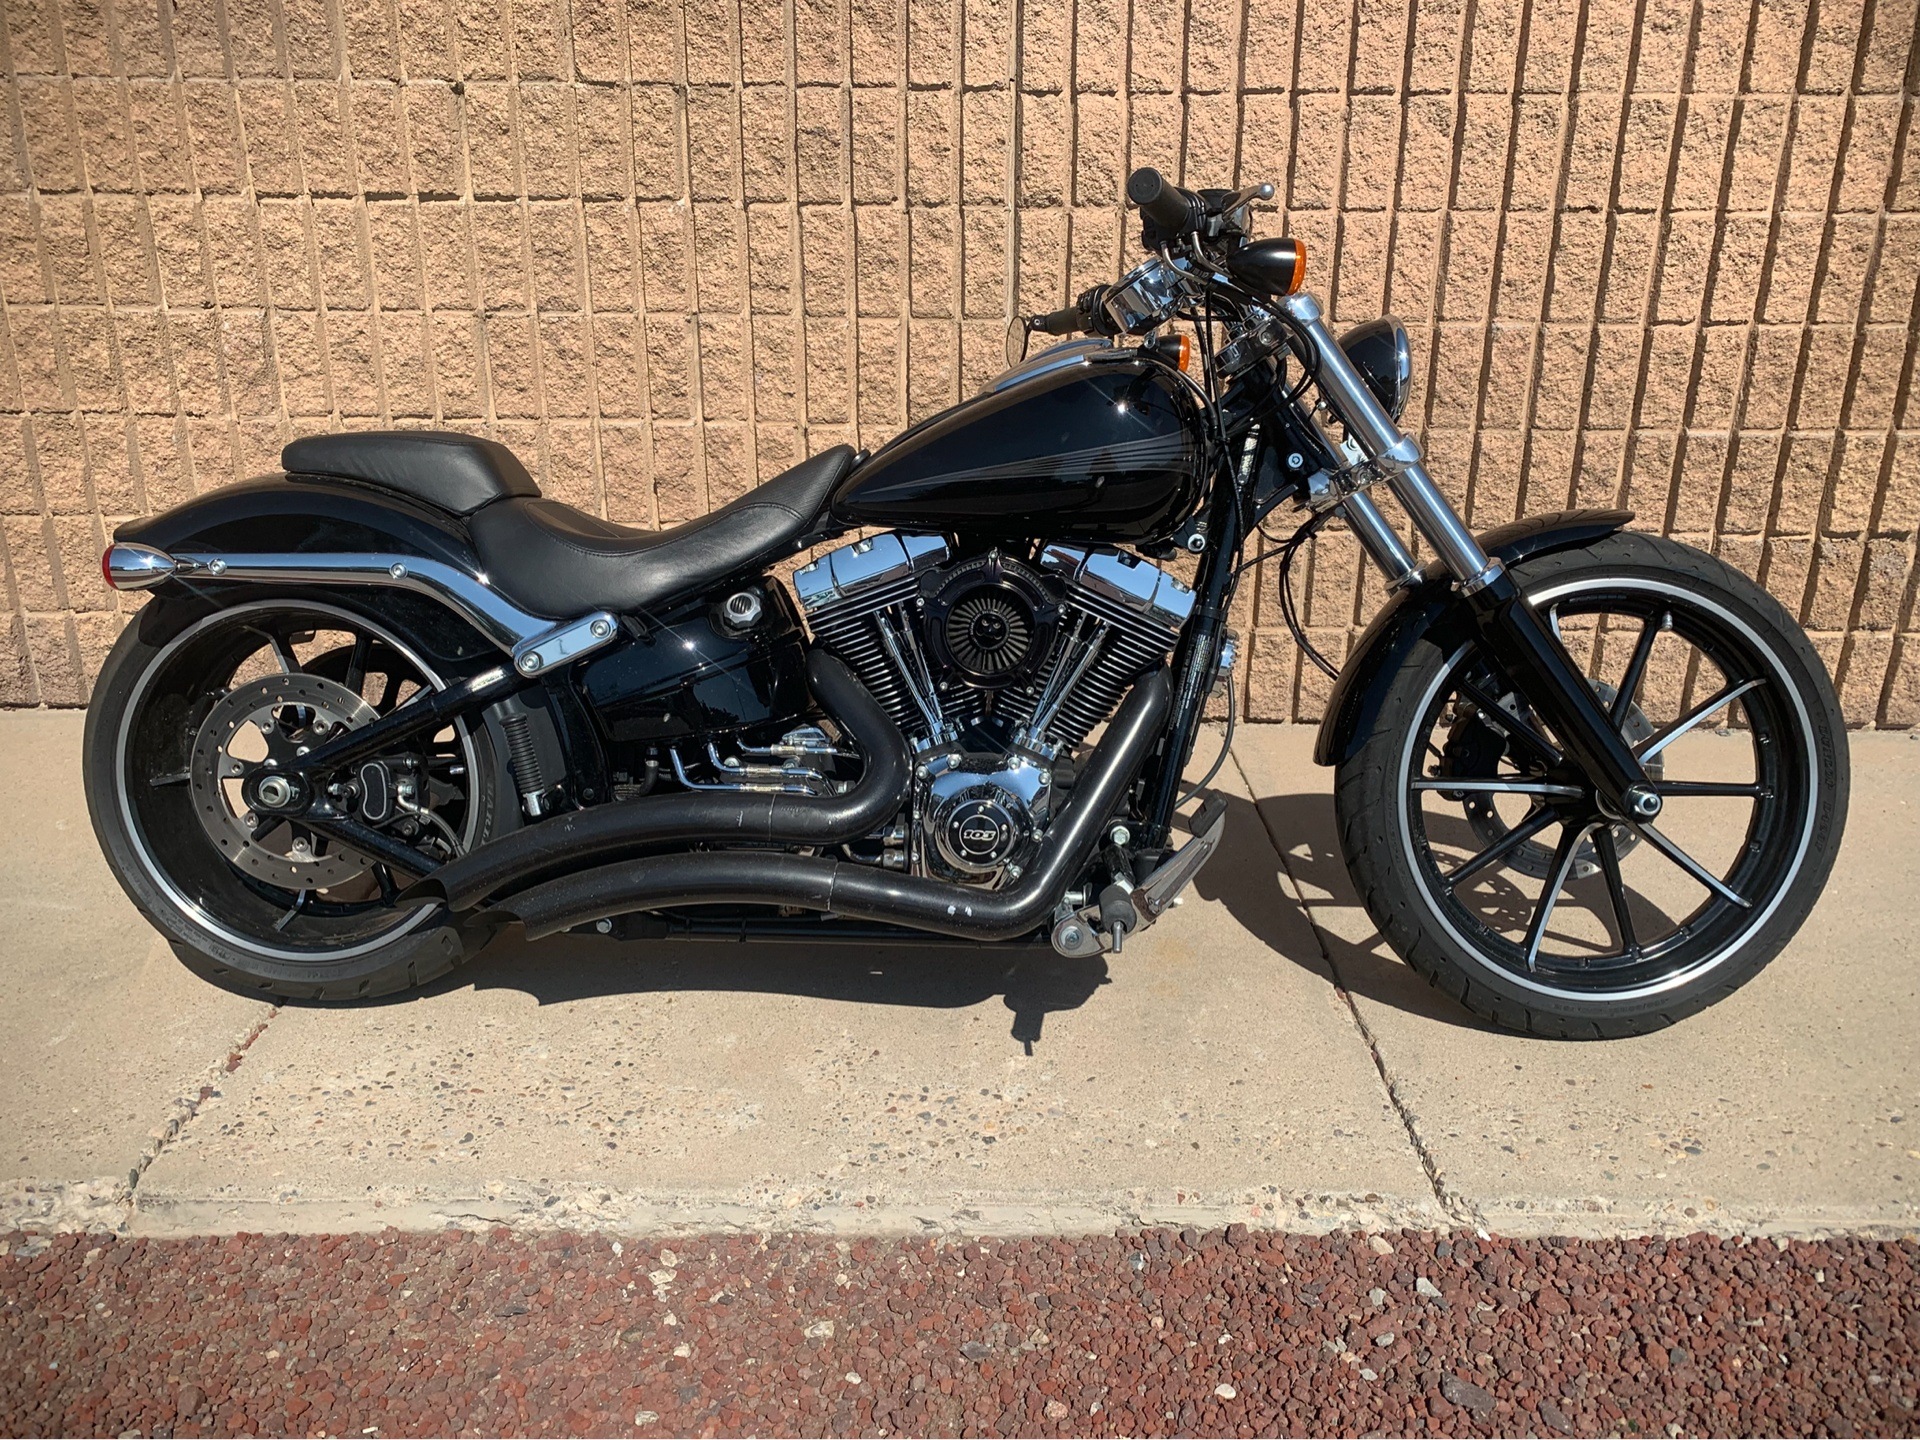 2014 HarleyDavidson Breakout For Sale Albuquerque, NM 10664